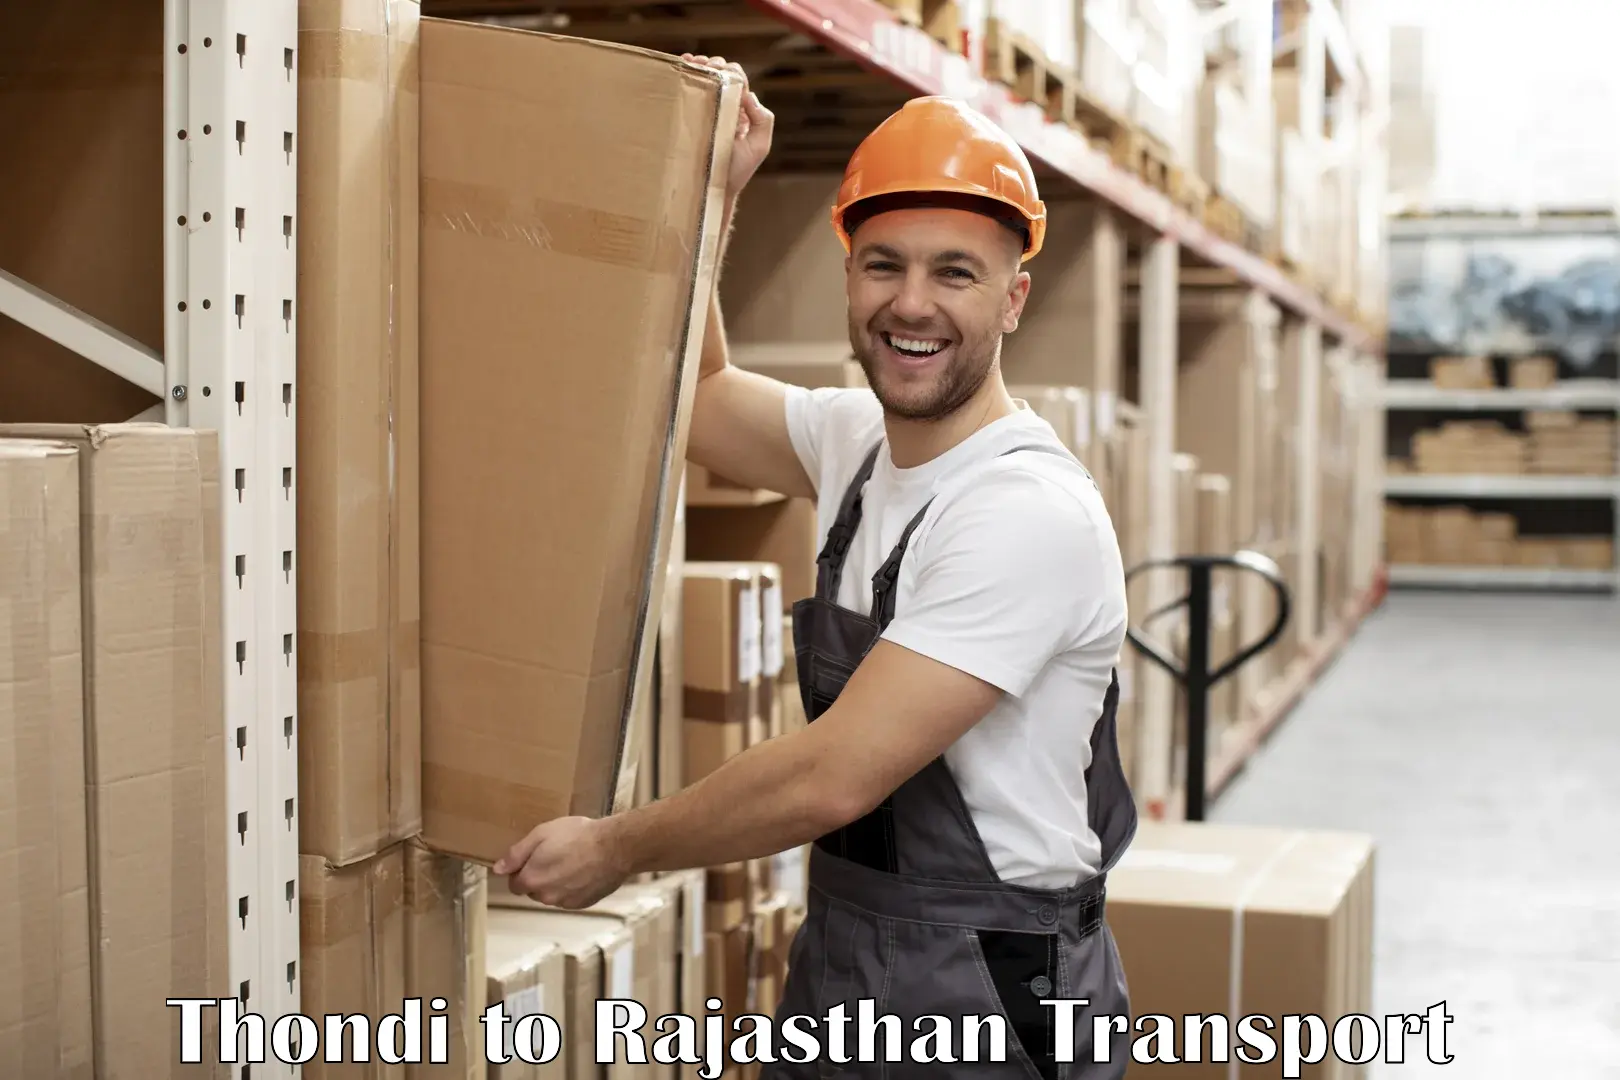 Daily transport service Thondi to Rajasthan